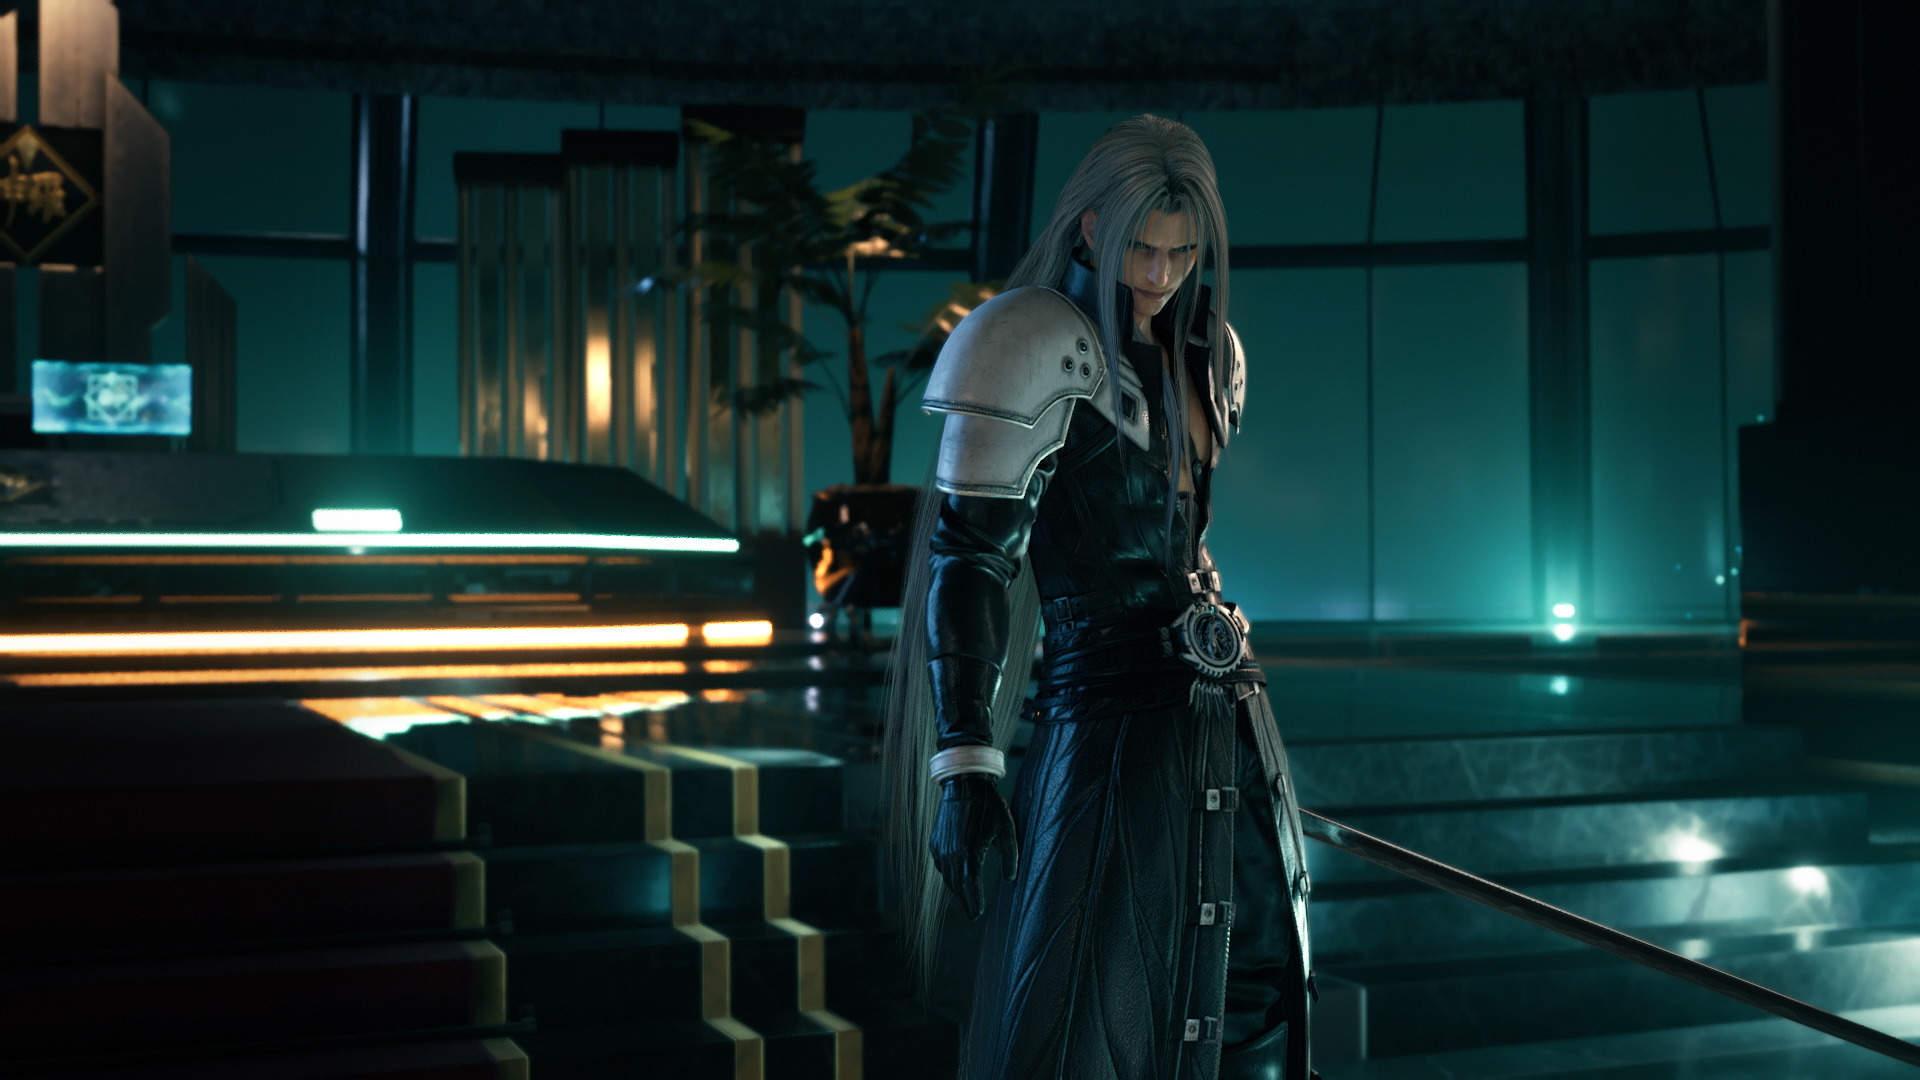 New Final Fantasy 7 Remake image show off Sephiroth, Shiva